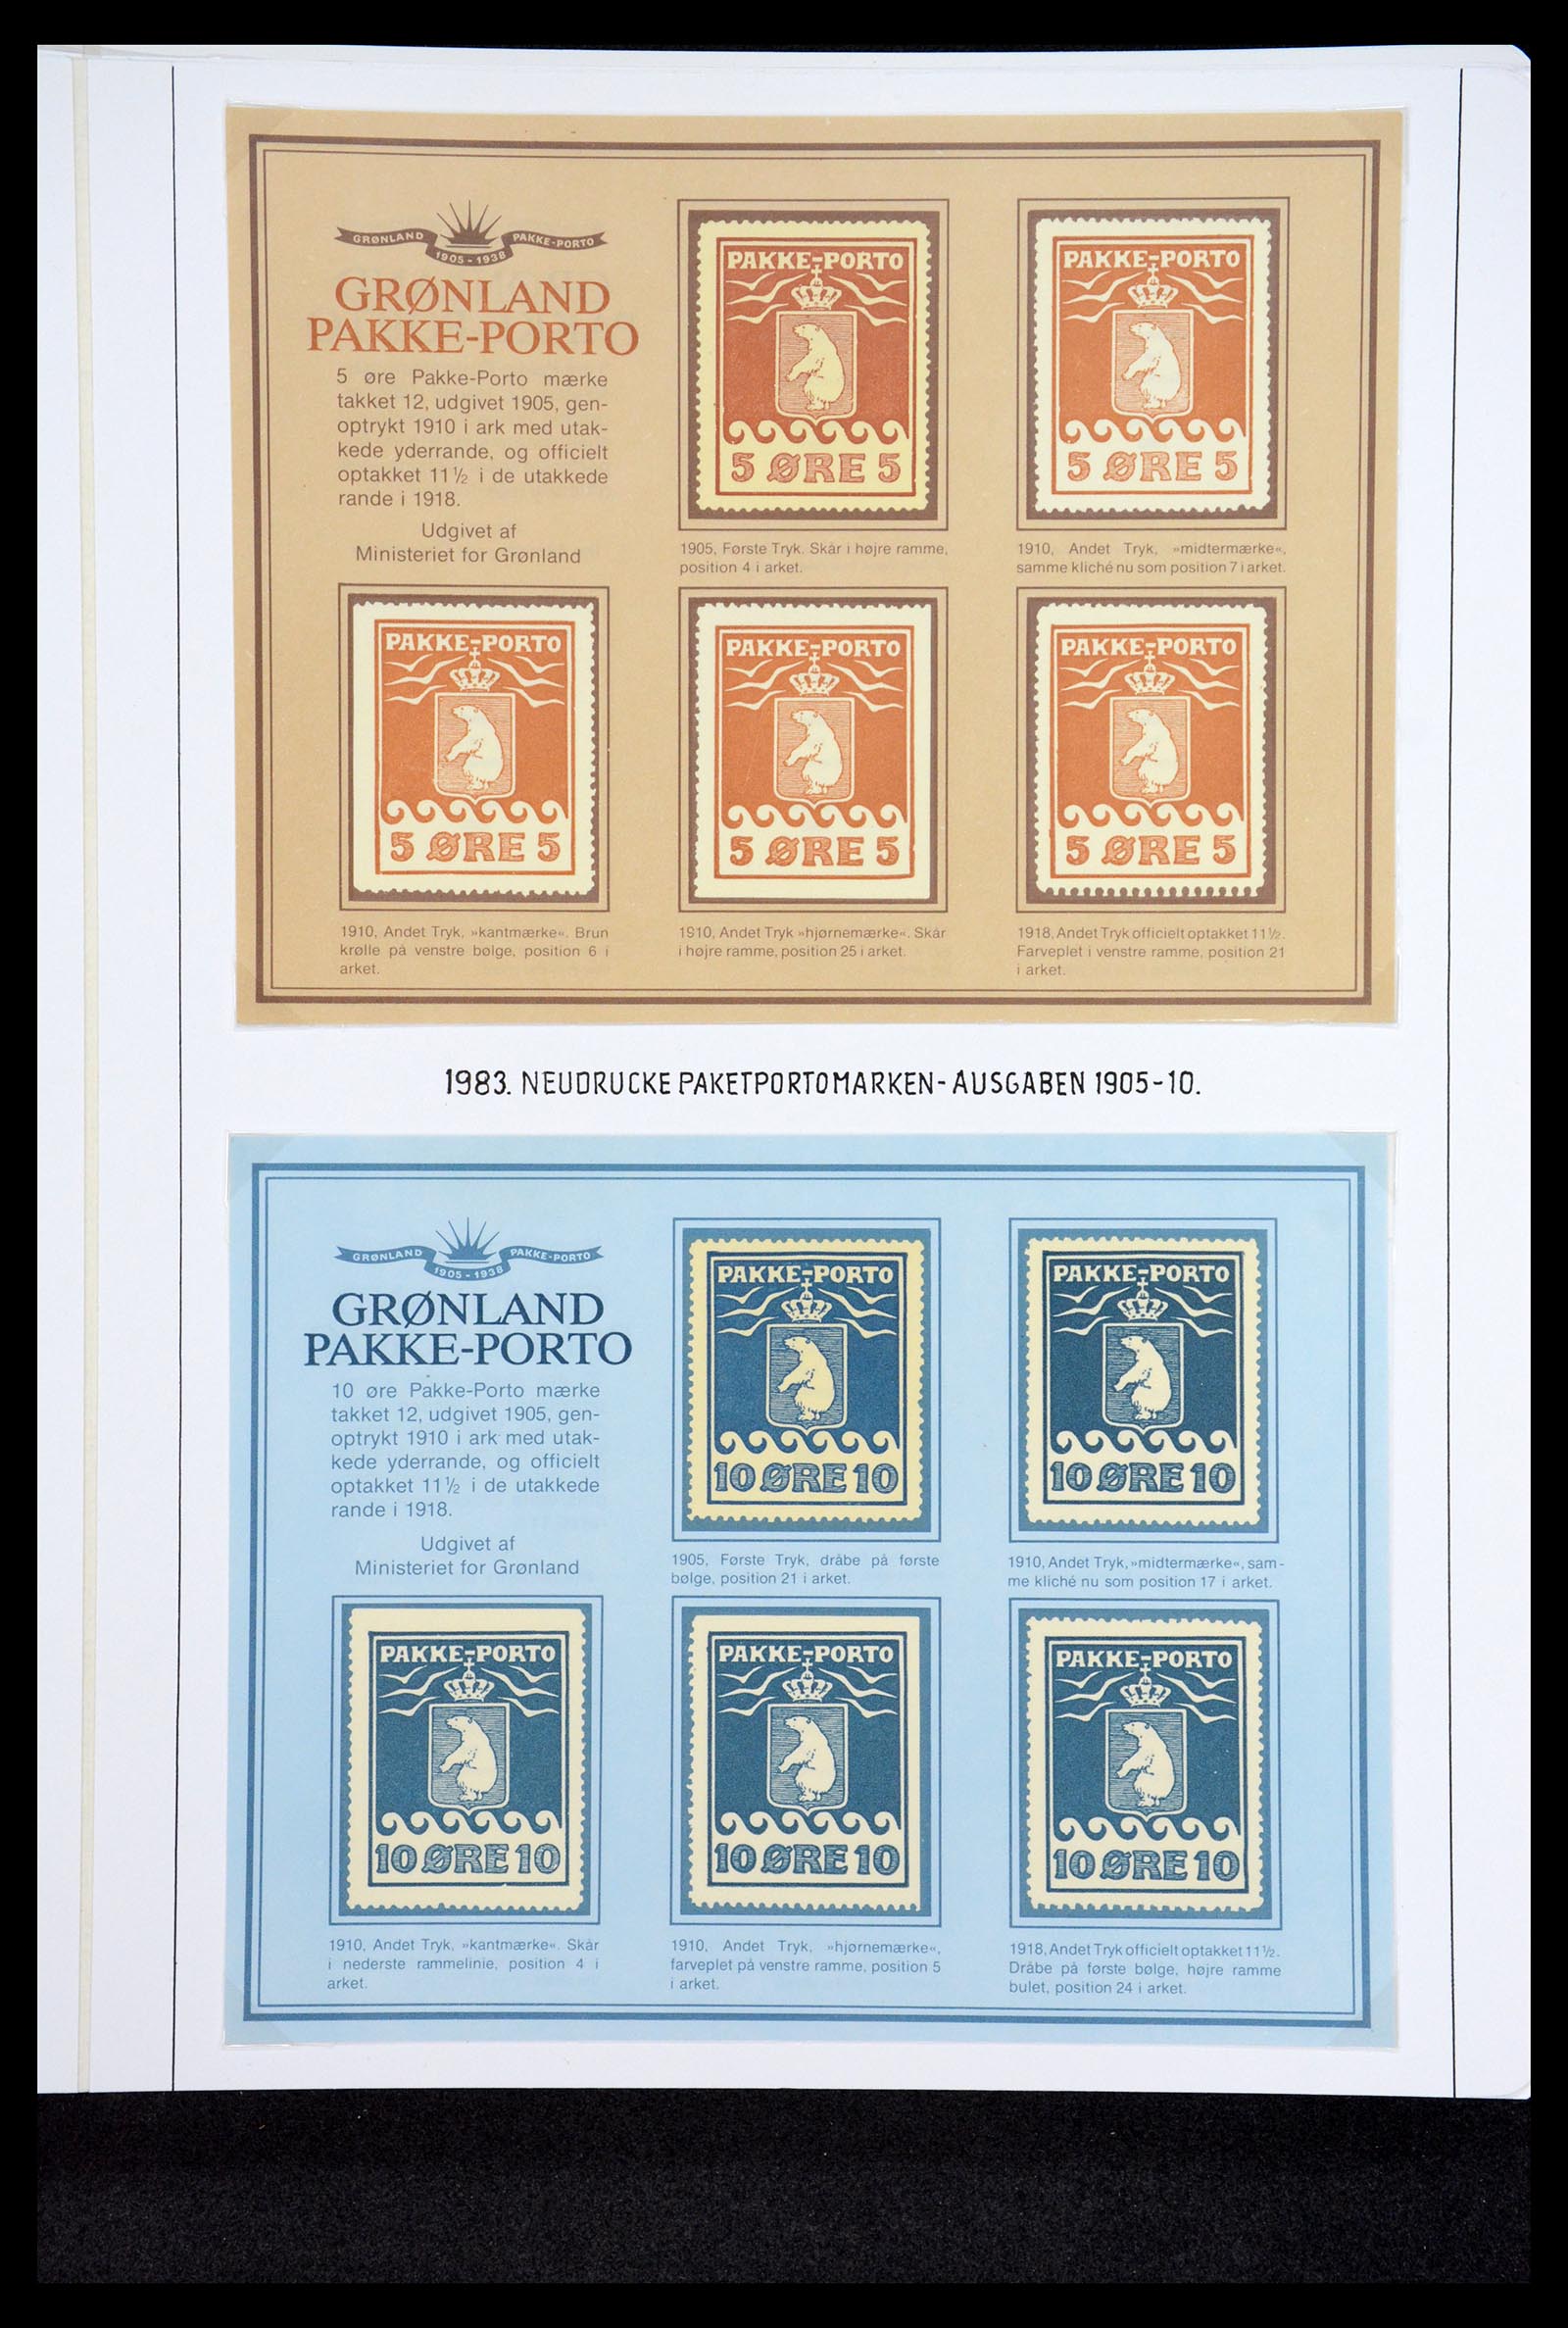 36748 010 - Stamp collection 36748 Greenland pakke-porto 1905-1930.